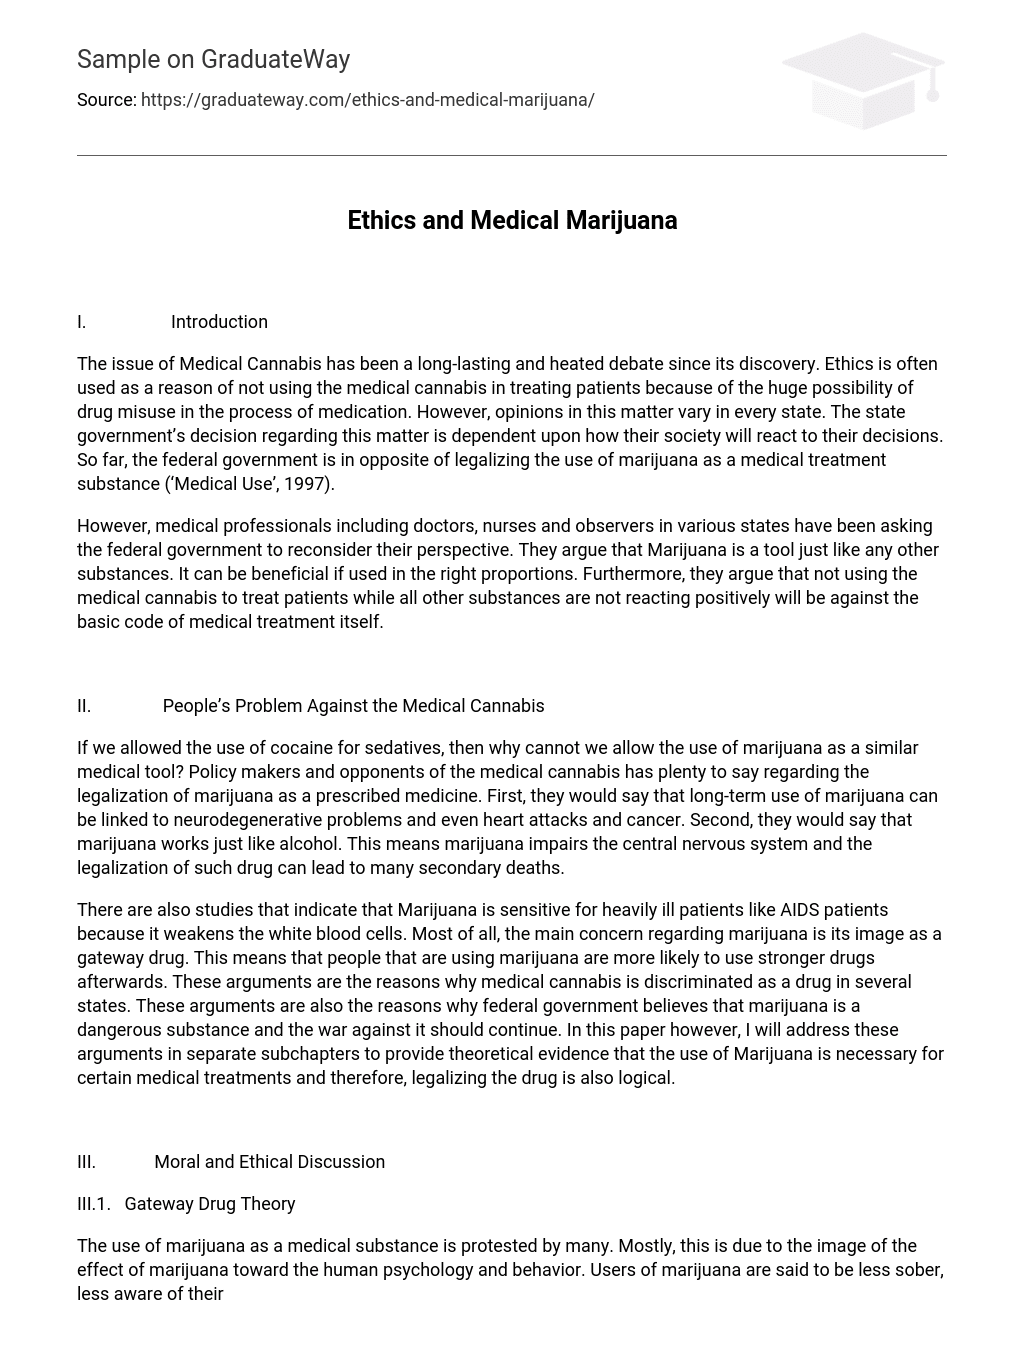 Ethics and Medical Marijuana